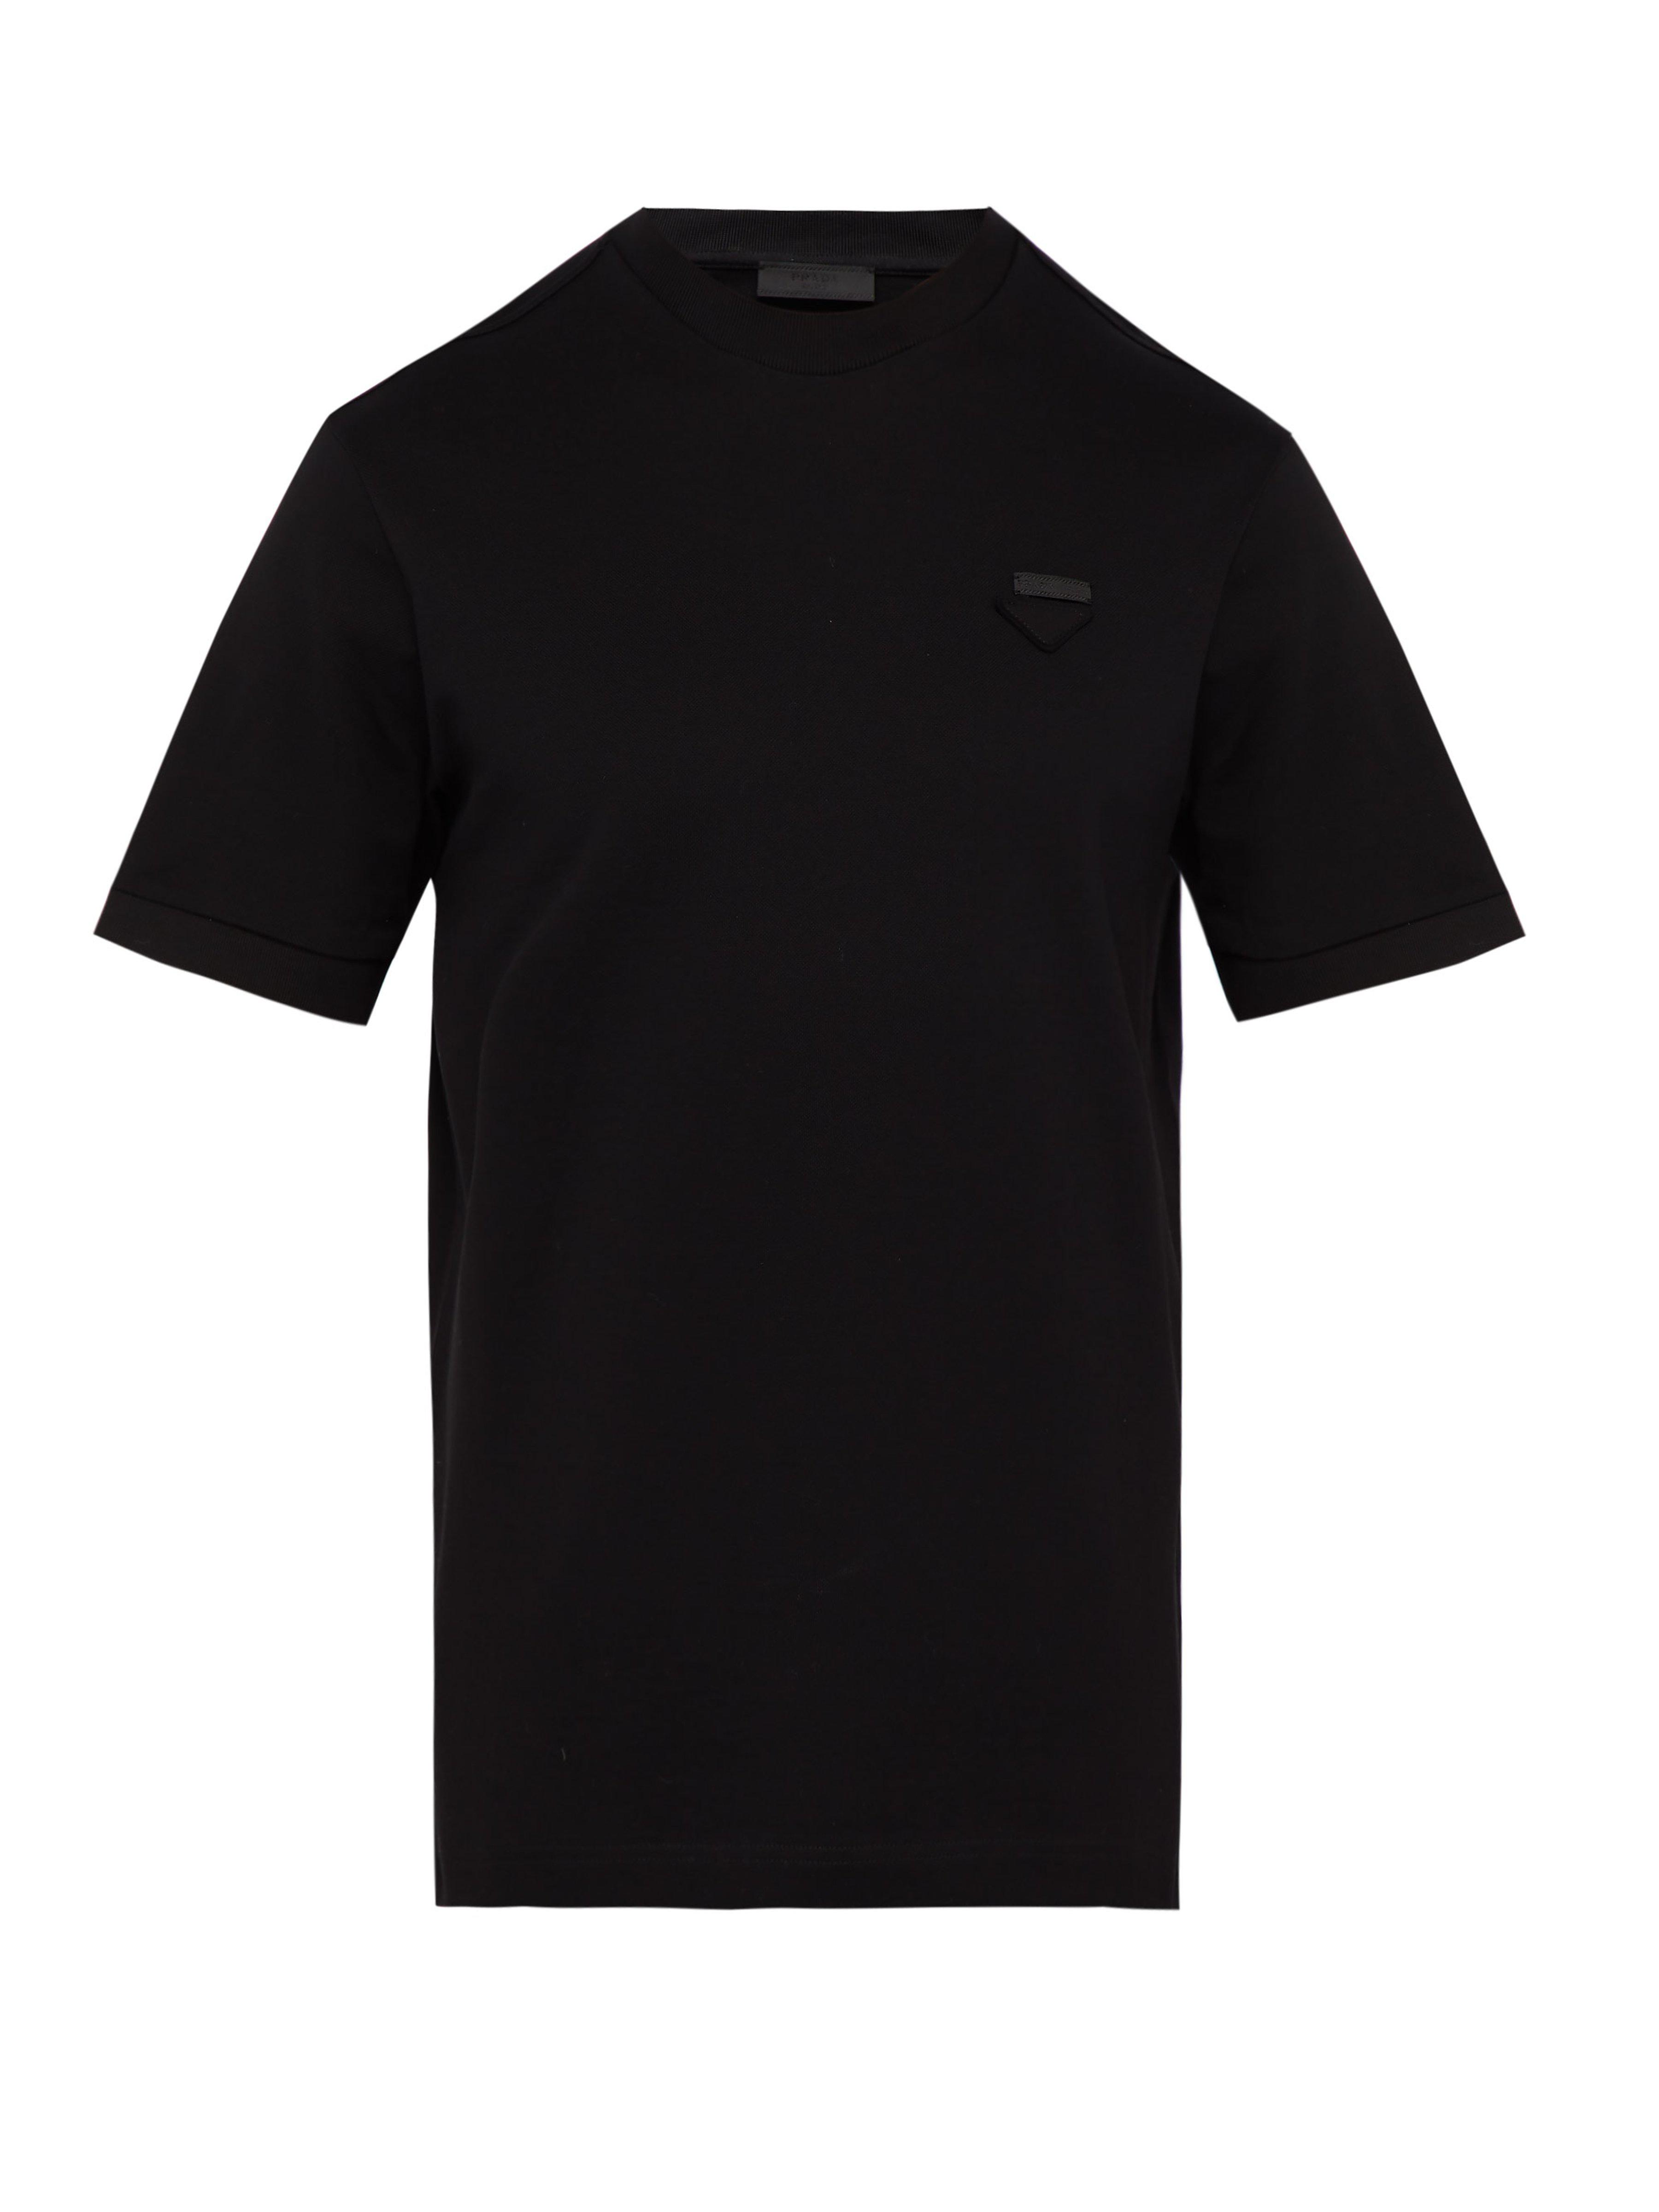 Prada Cotton Logo Piqué T-shirt in Black for Men - Save 22% - Lyst